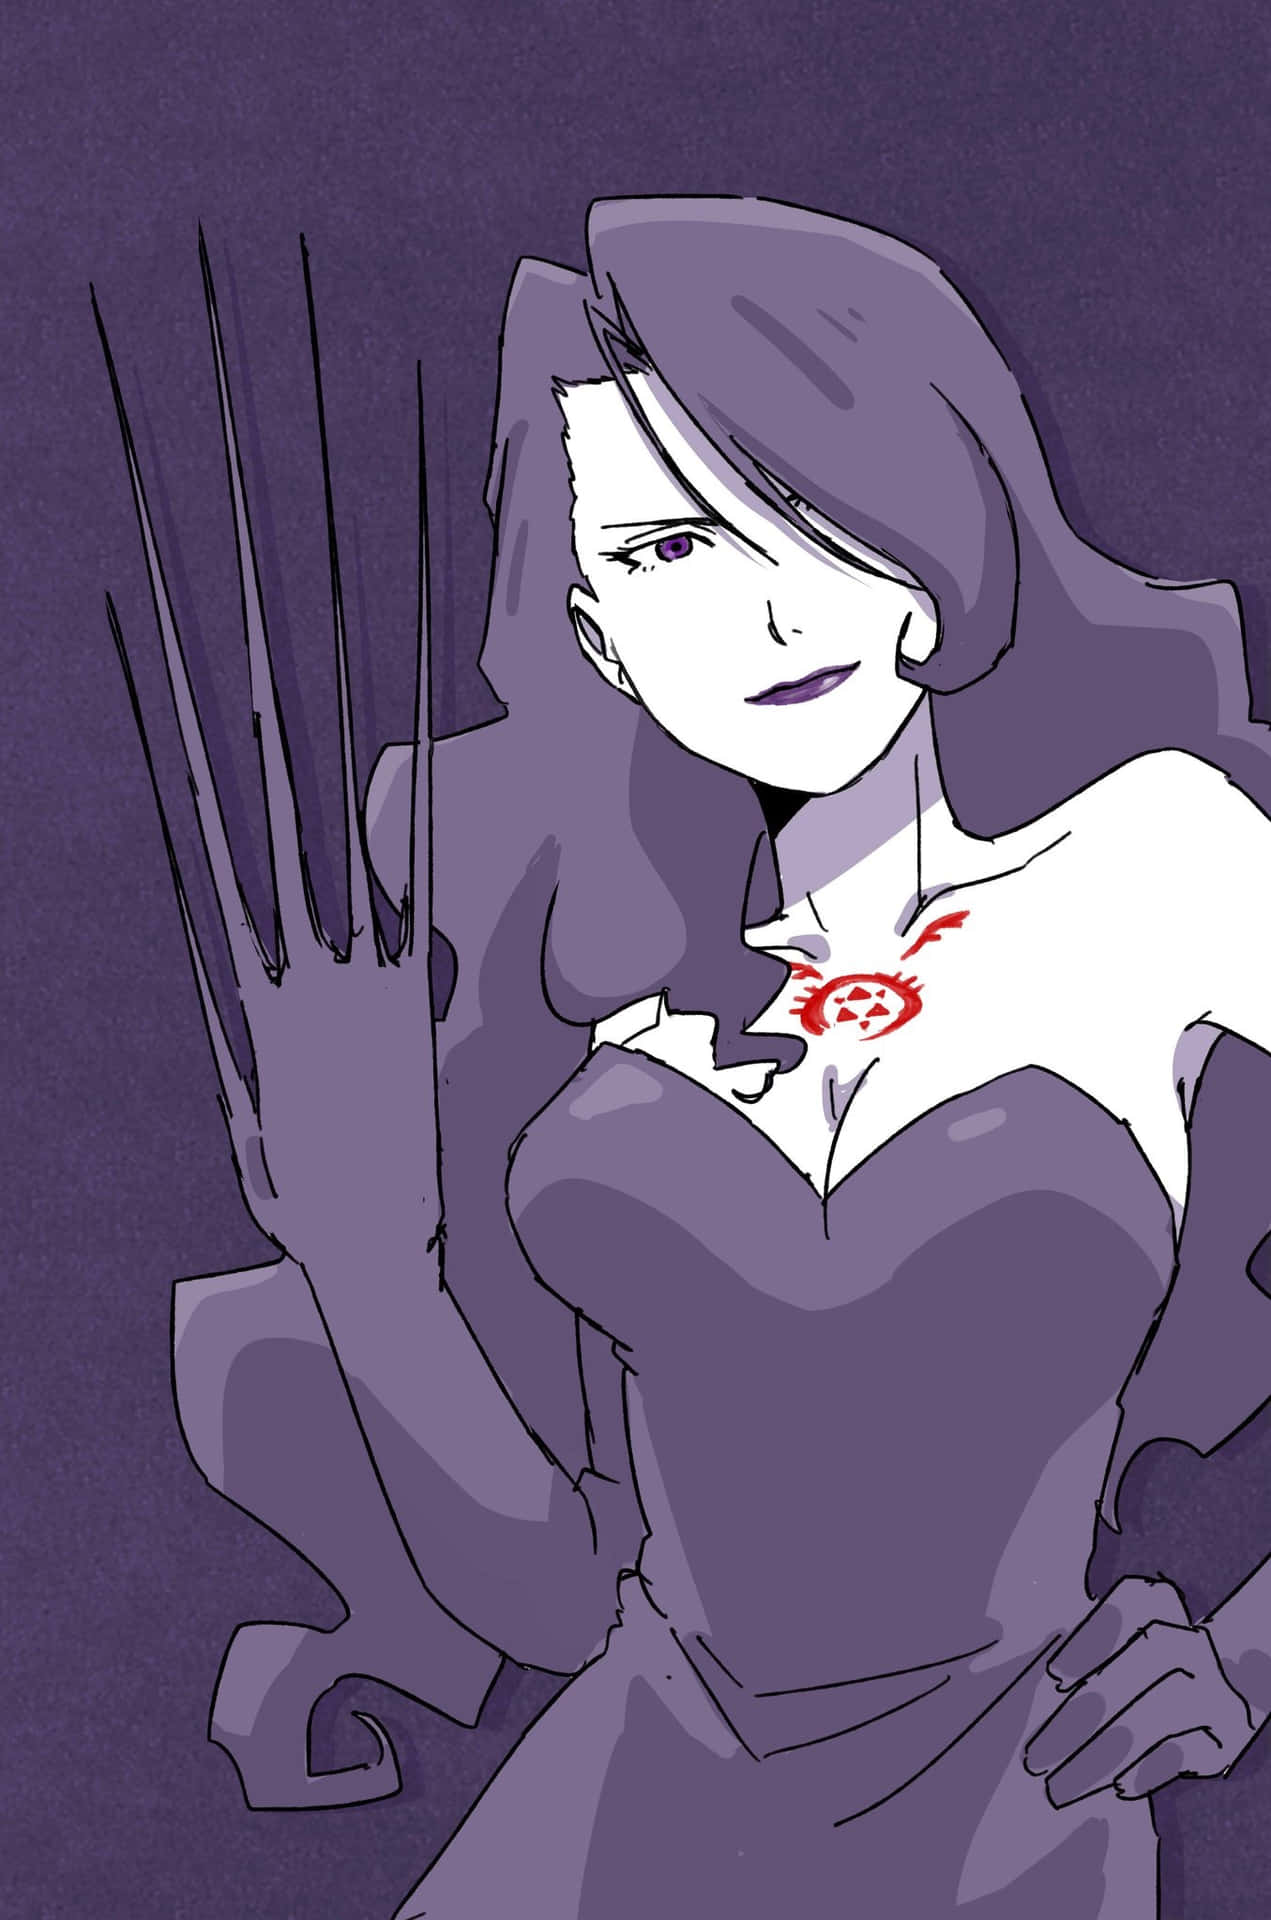 Obrade Arte Del Personaje Lust De Fullmetal Alchemist. Fondo de pantalla